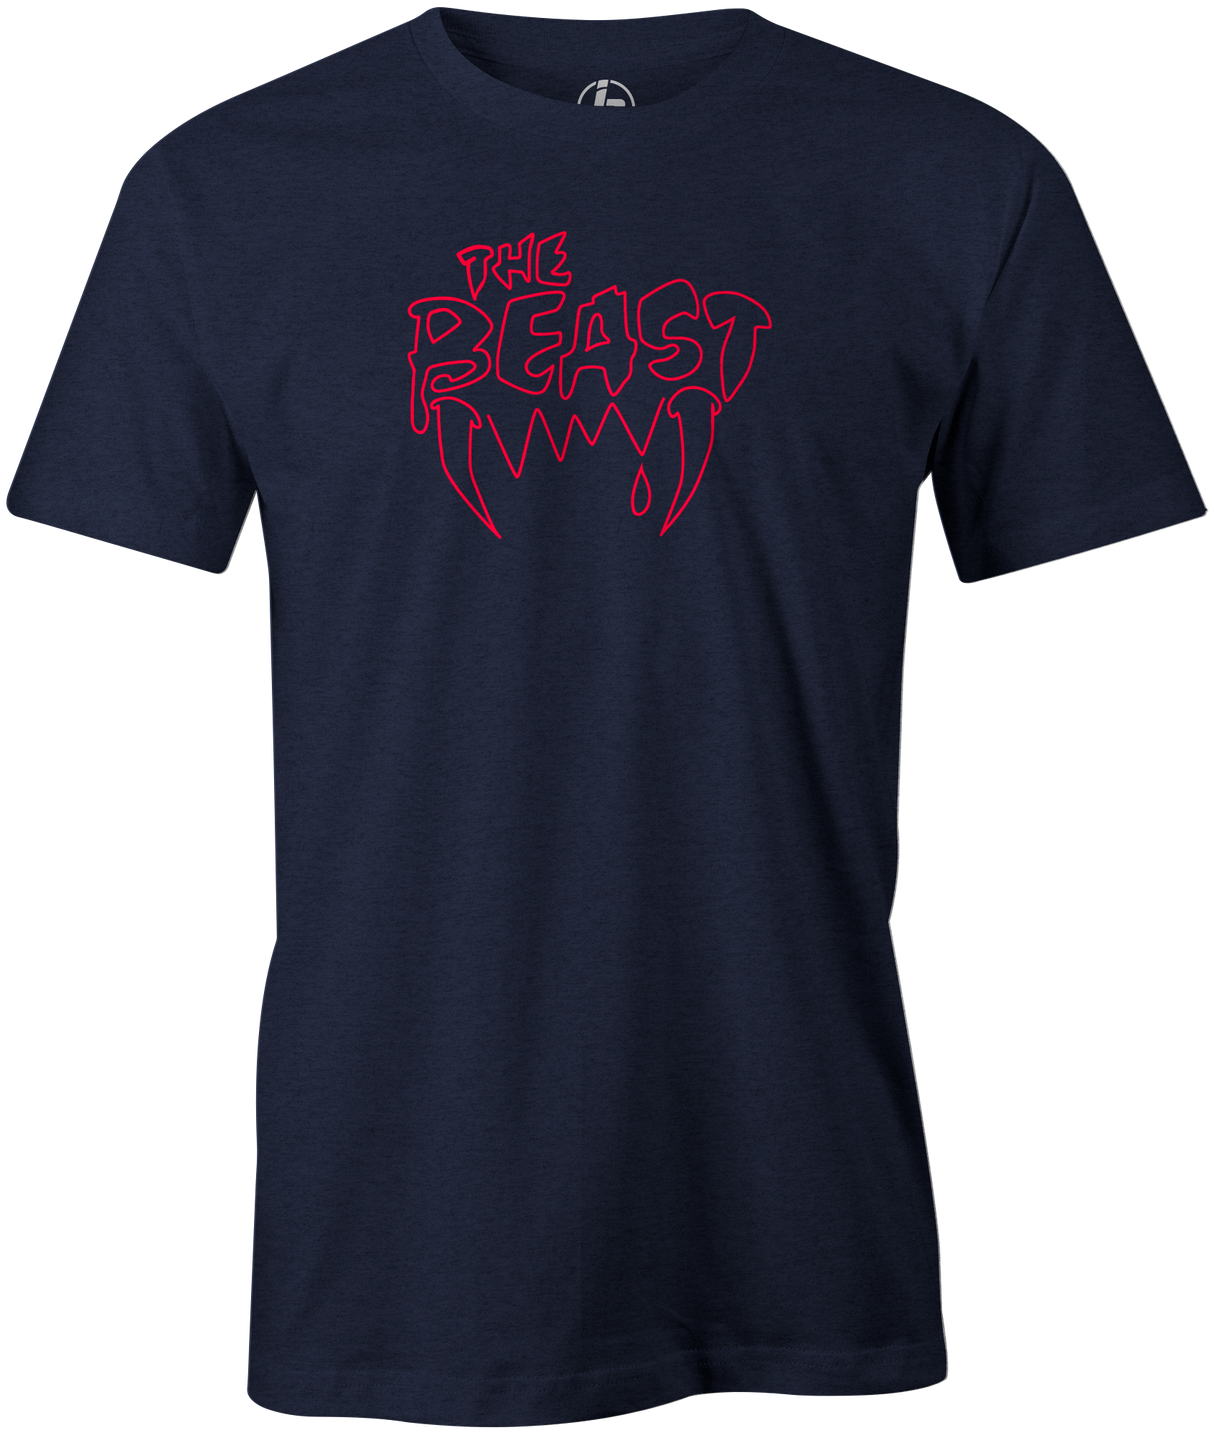 Beast Men's Bowling T-Shirt, Navy, Tshirt, tee, tee-shirt, tee shirt, retro, bowling ball